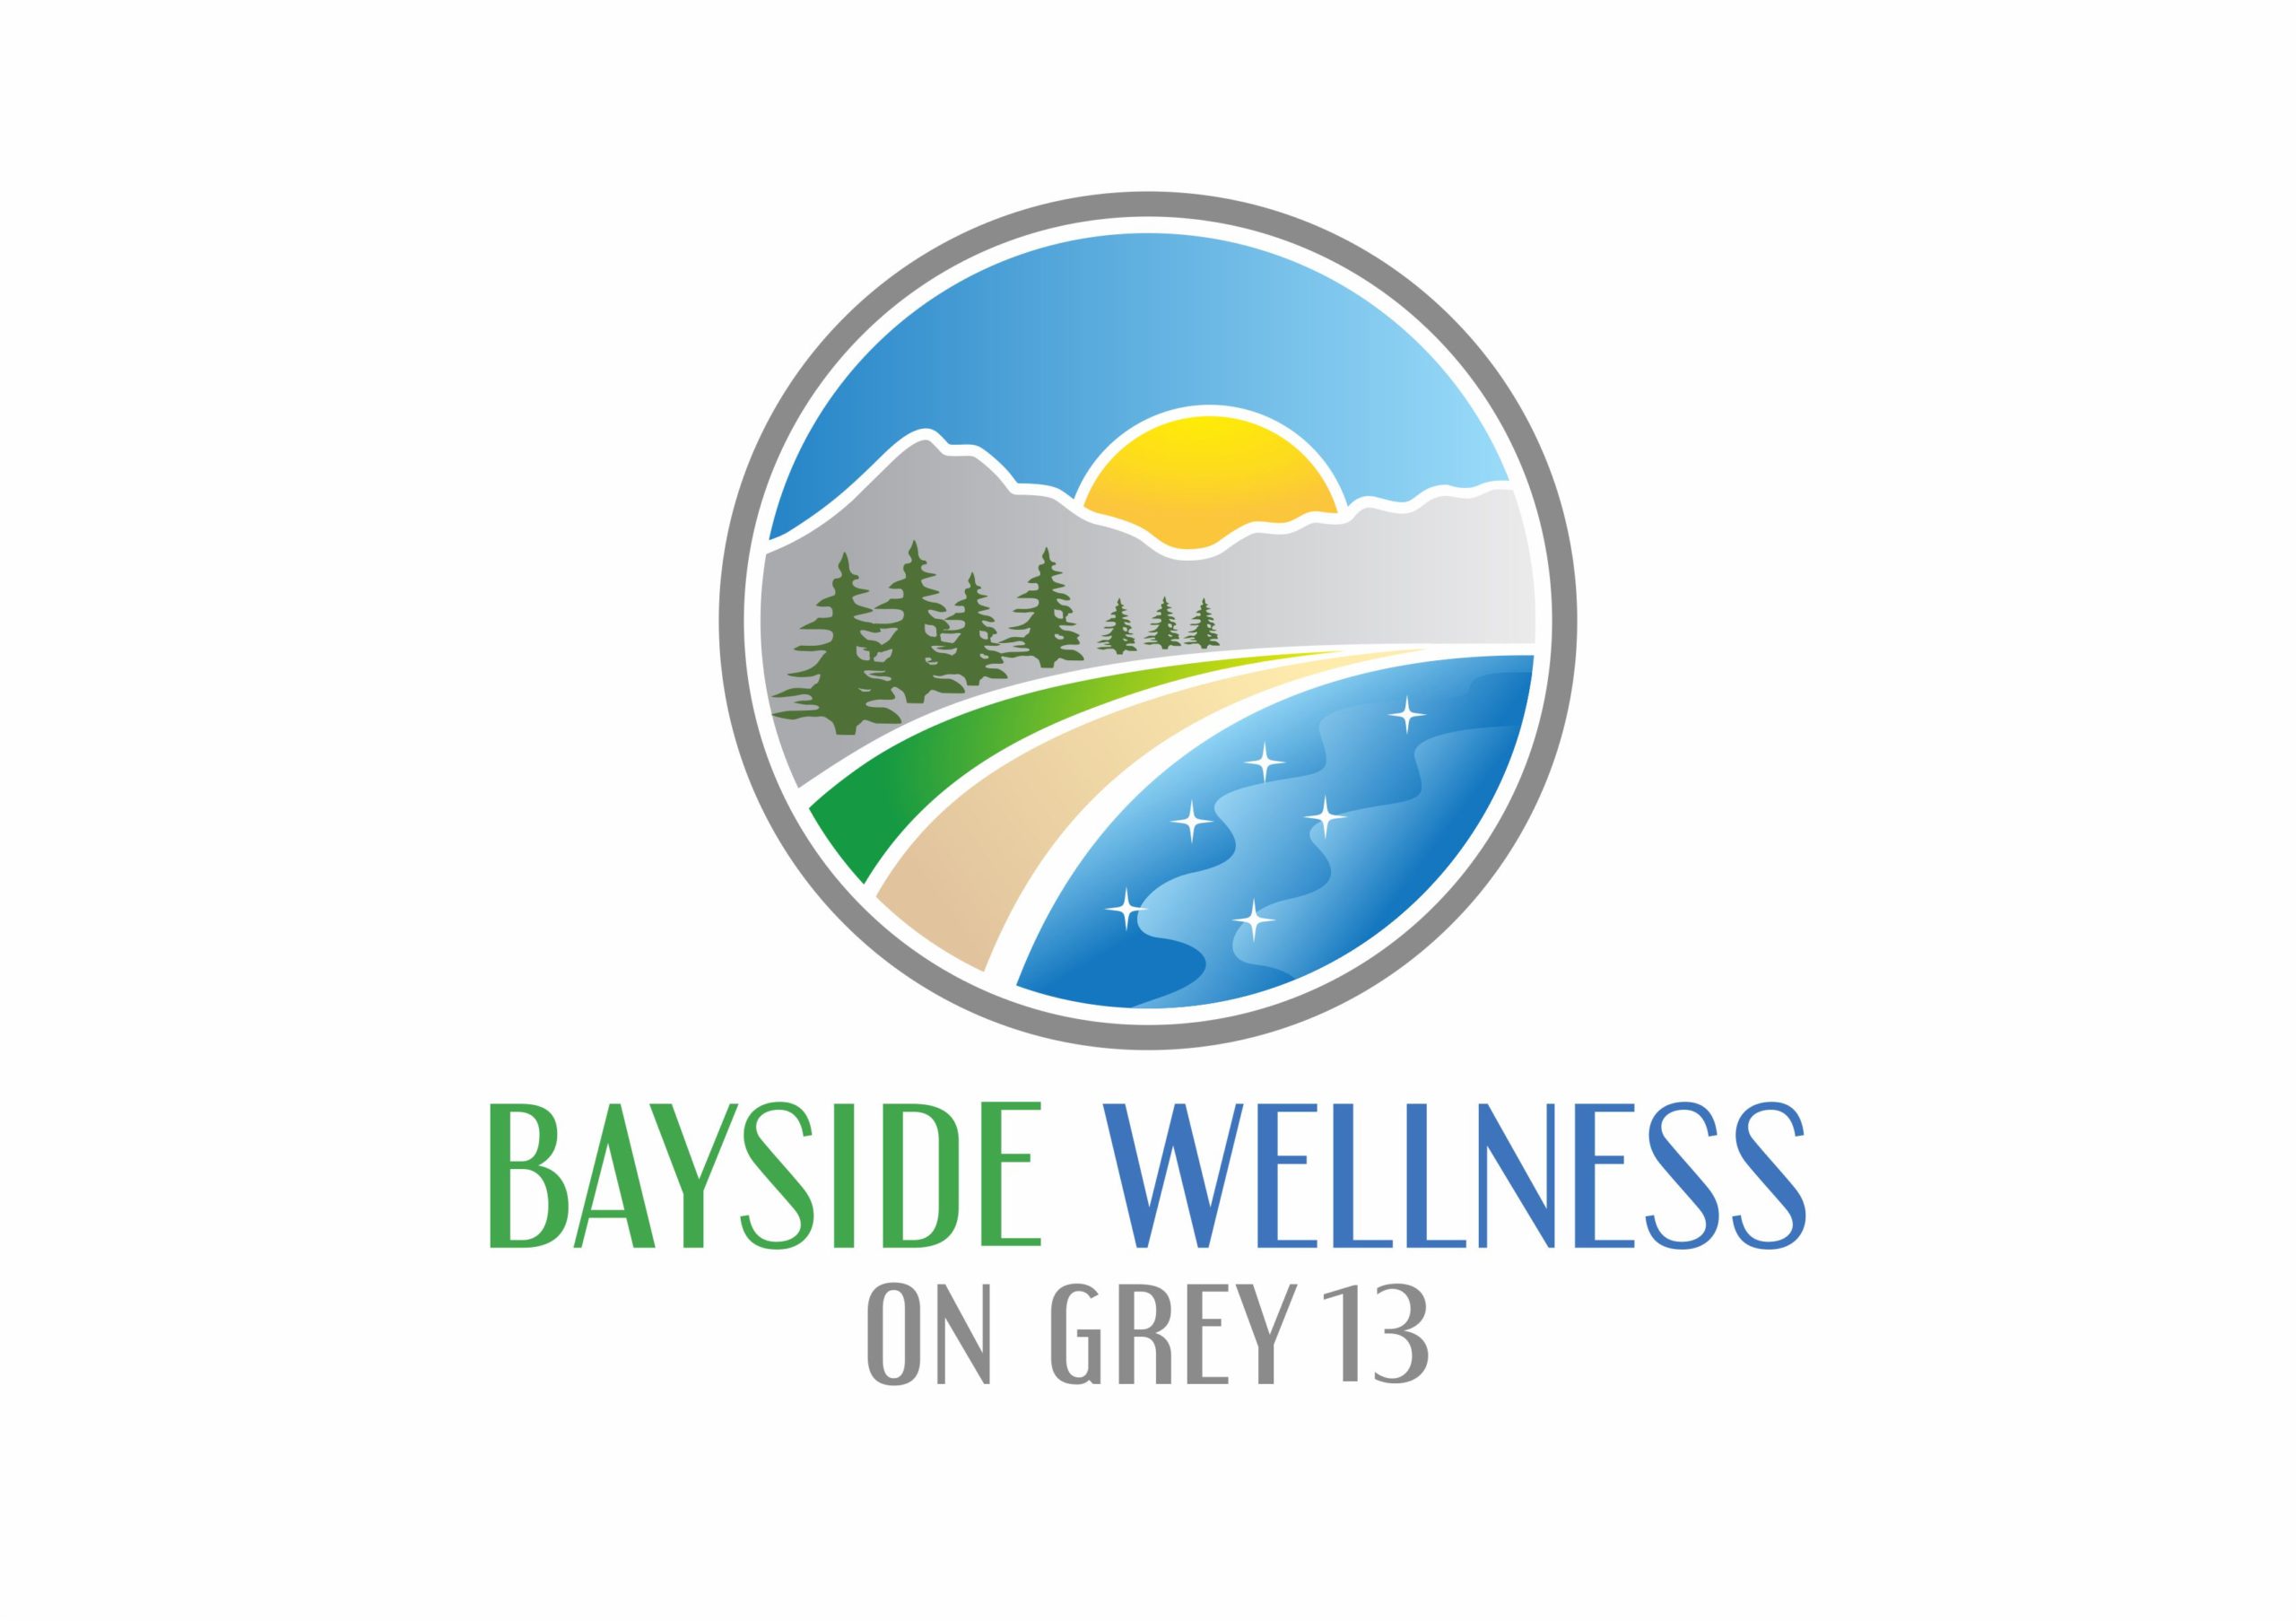 Bayside Wellness on Grey 13